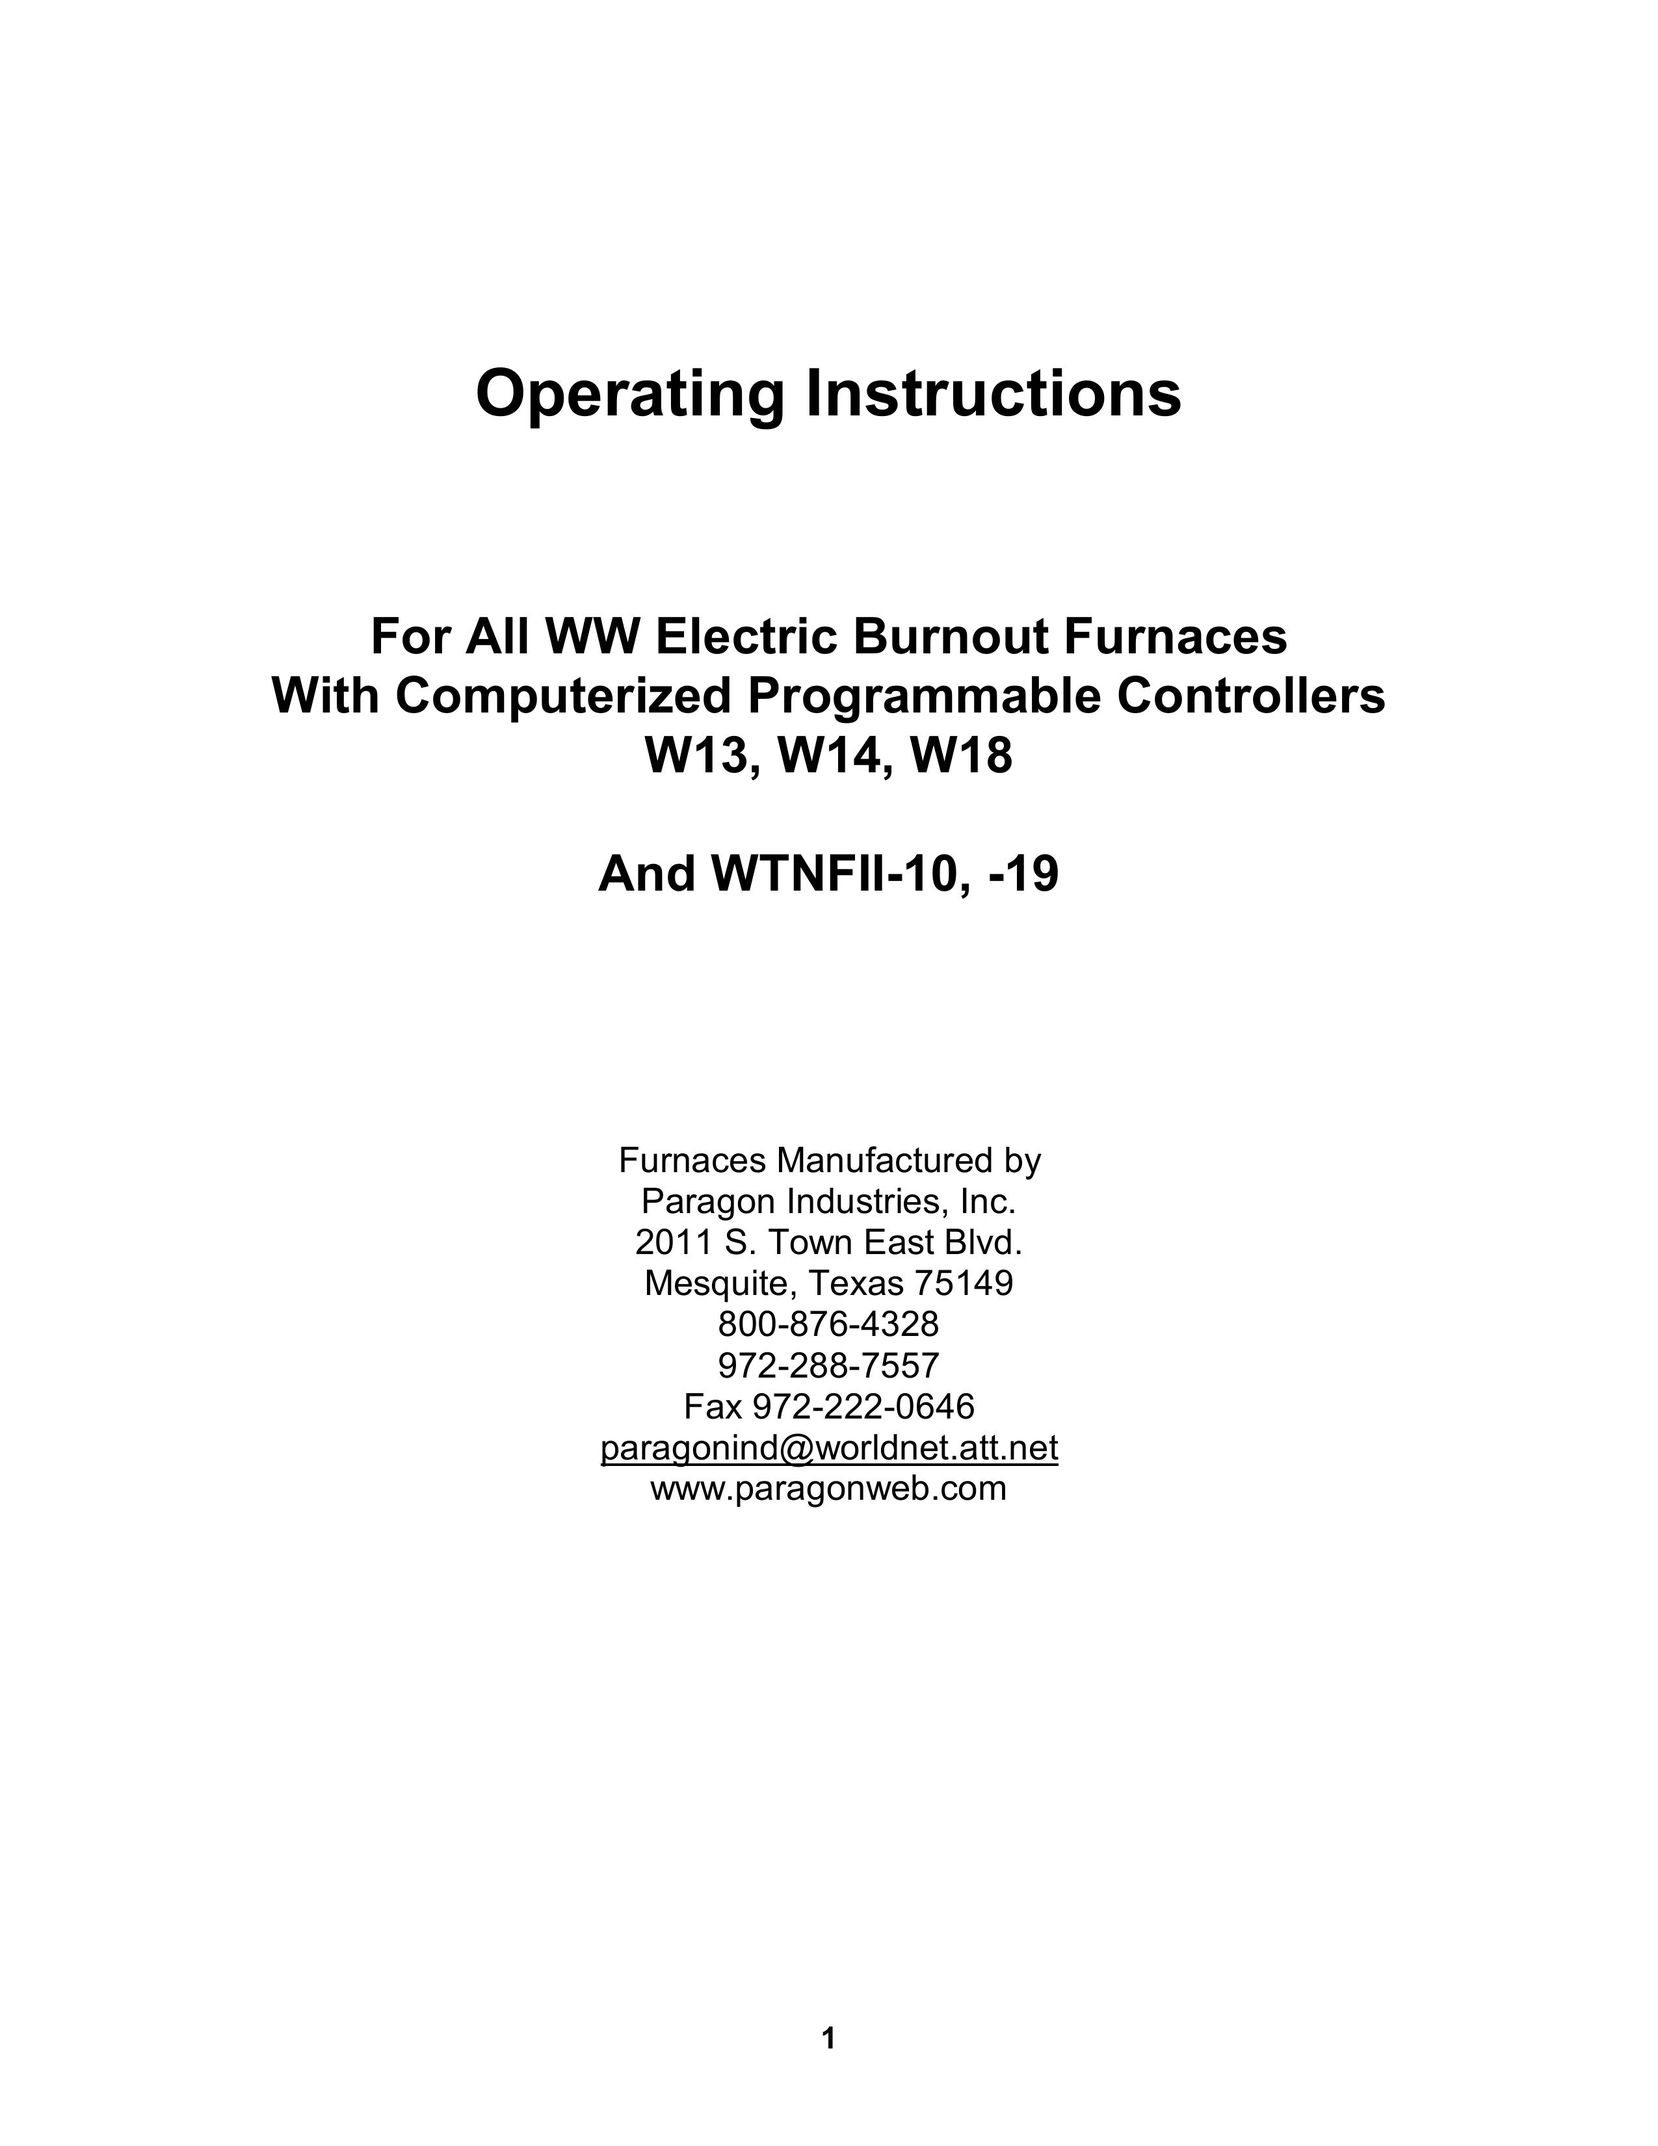 Paragon WTNFII-10 Furnace User Manual